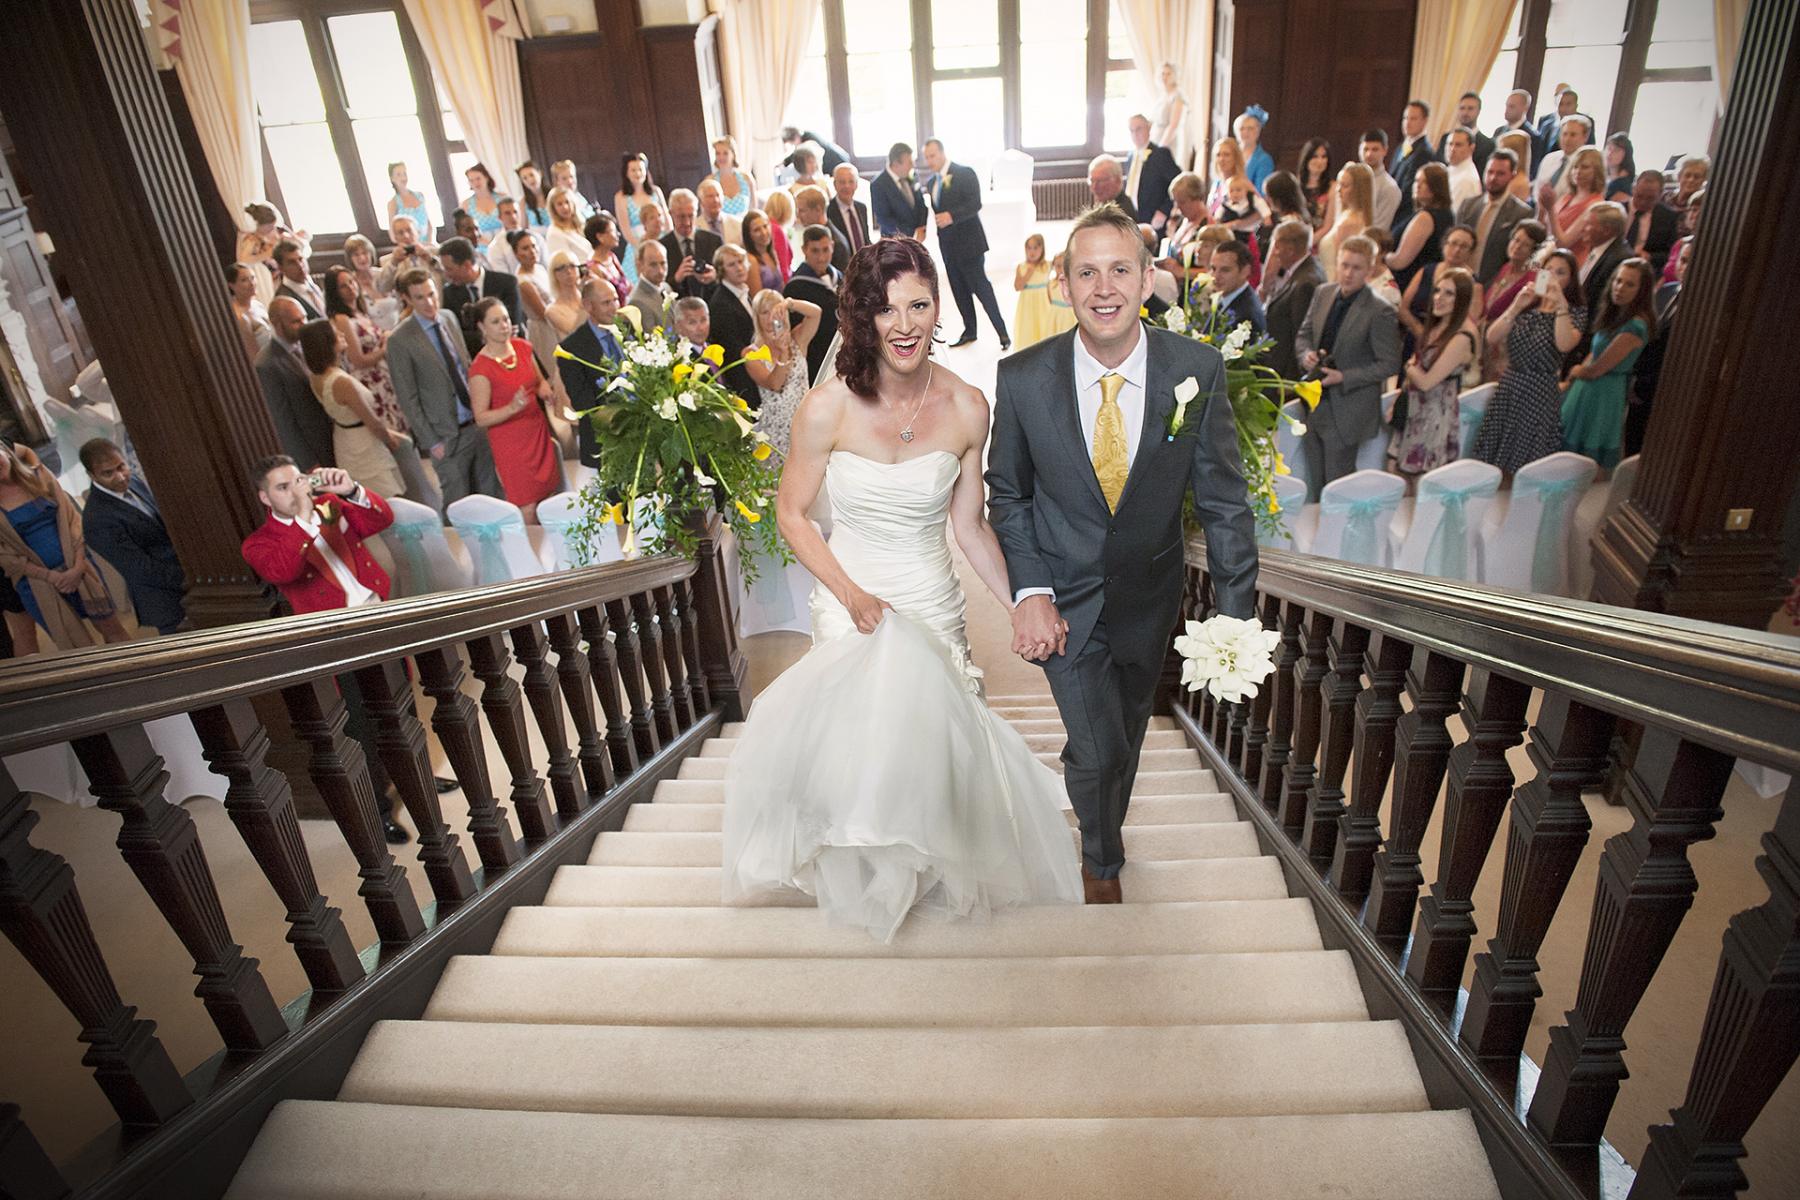 Buckland-hall wedding-photographer-bride-groom-staircase-civil-wedding-ceremony-south-wales-vegetarian-wedding-venues